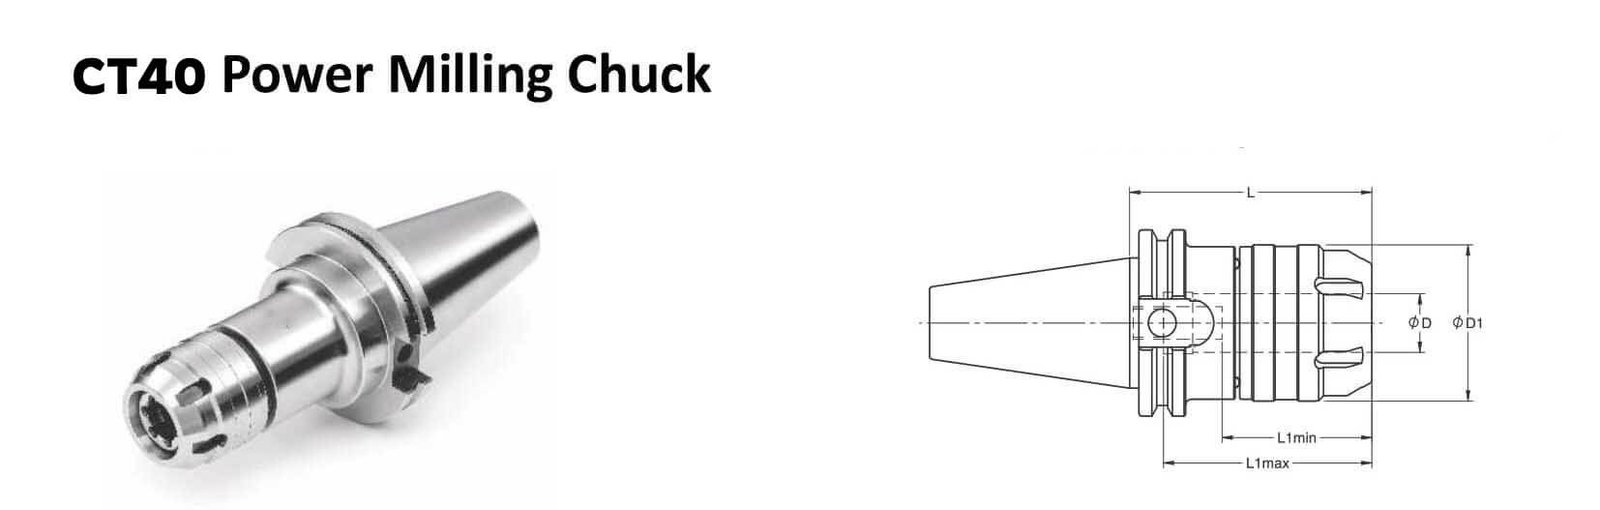 CT40 C 0.750 - 5.00 Power Milling Chuck (Balanced to 2.5G 25000 rpm)